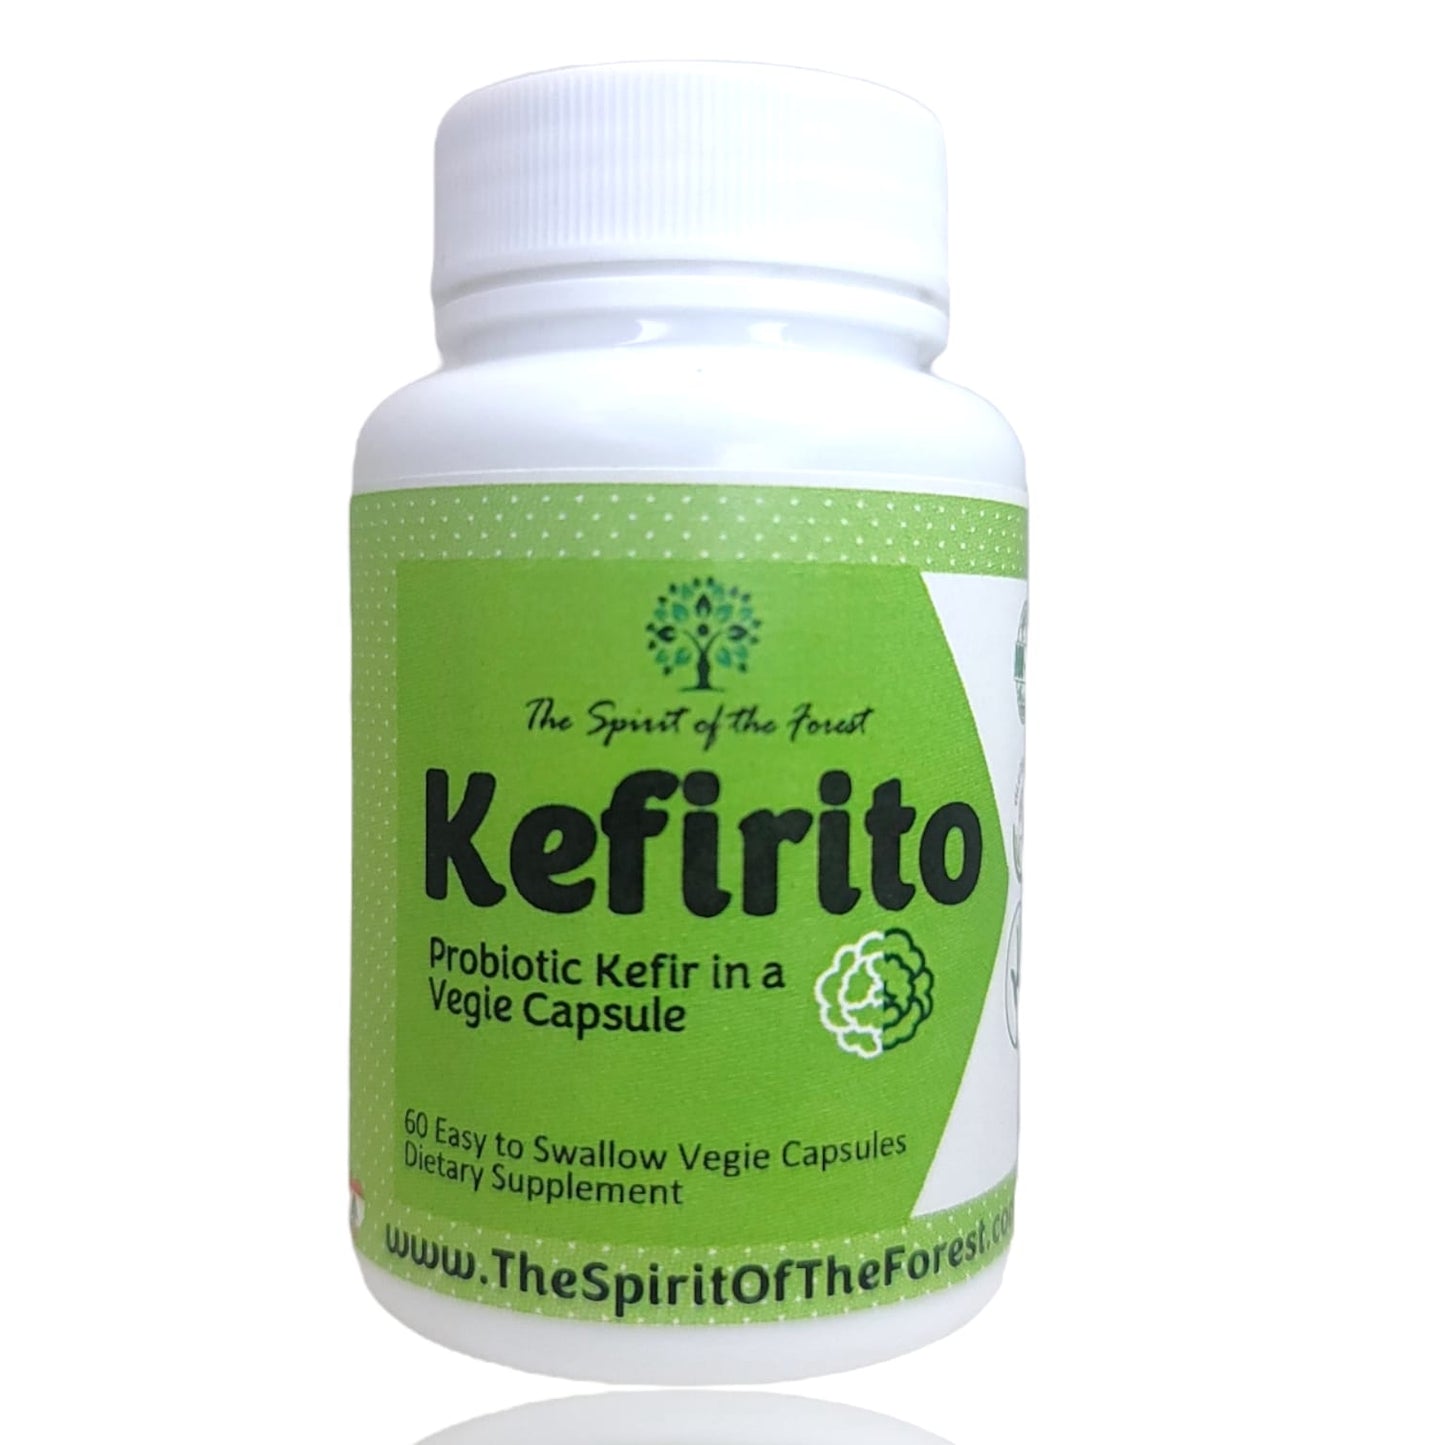 Kefirito Kefir Vegie Capsules Nutrient Billions Active Probiotic Cultures, Supports Optimal Digestive Health, Gluten-Free